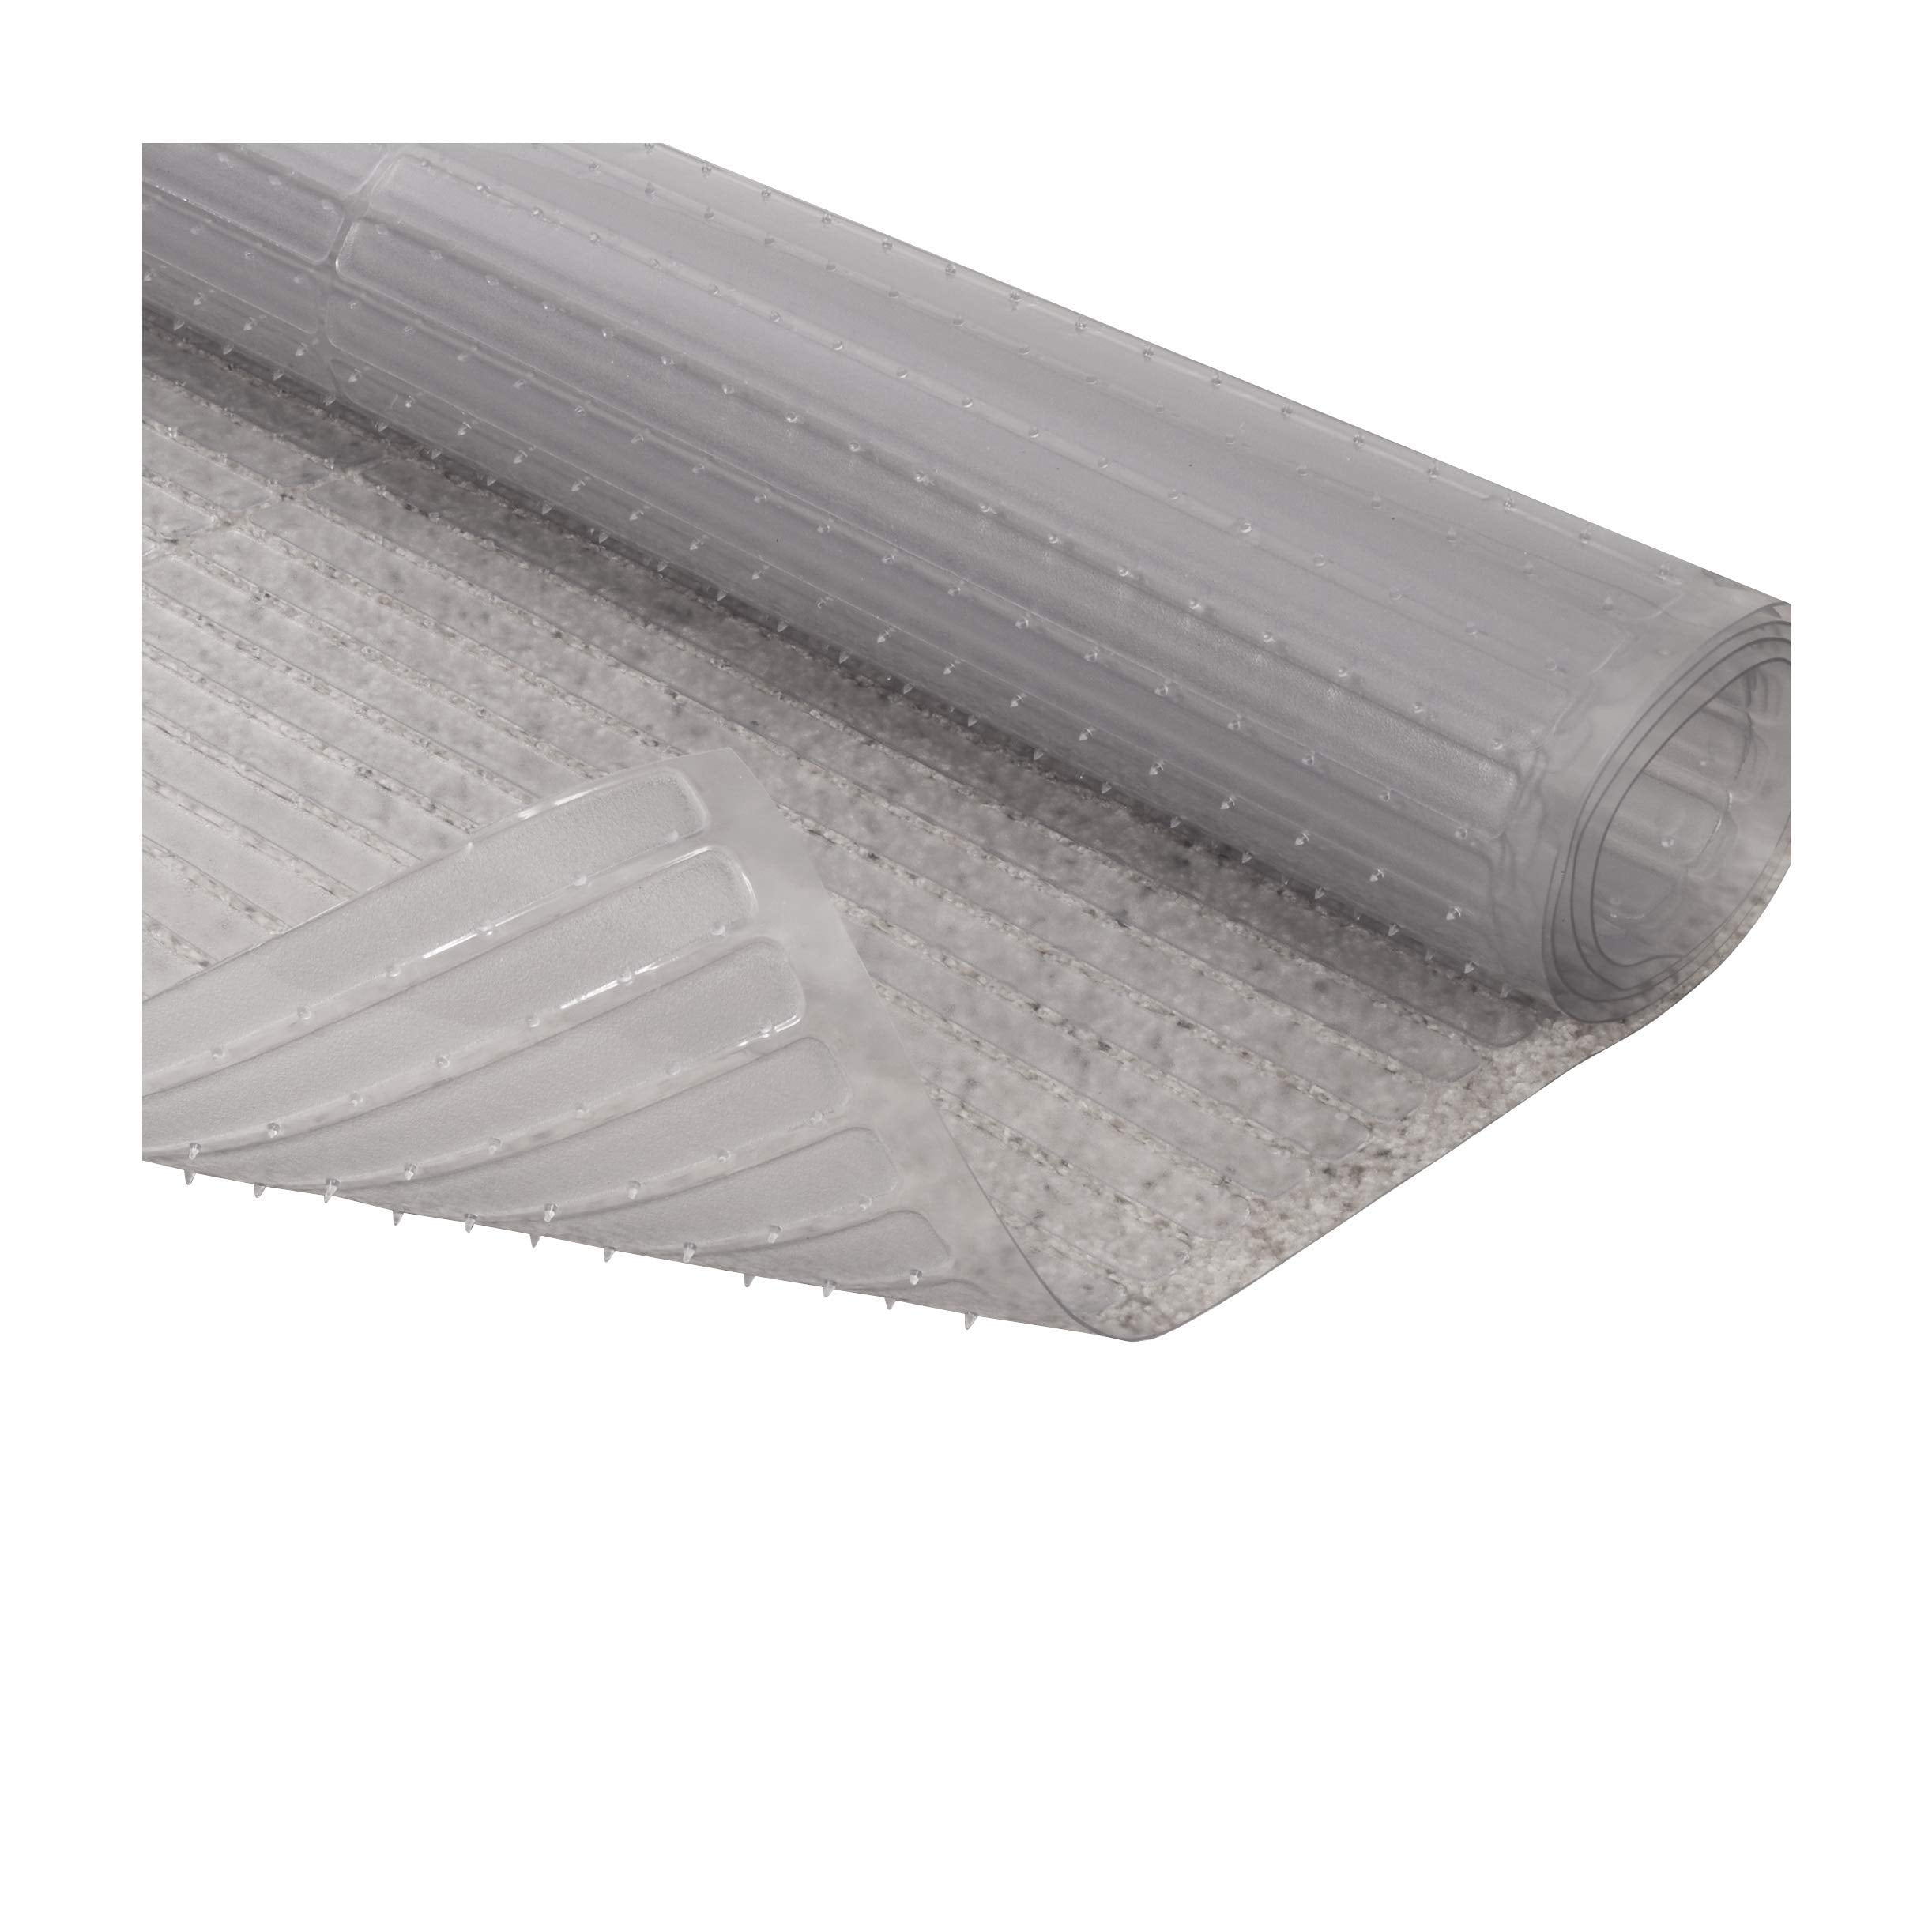 Clear Vinyl Plastic Floor Runner/Protector for Low Pile Carpet Skid-Resistant. 